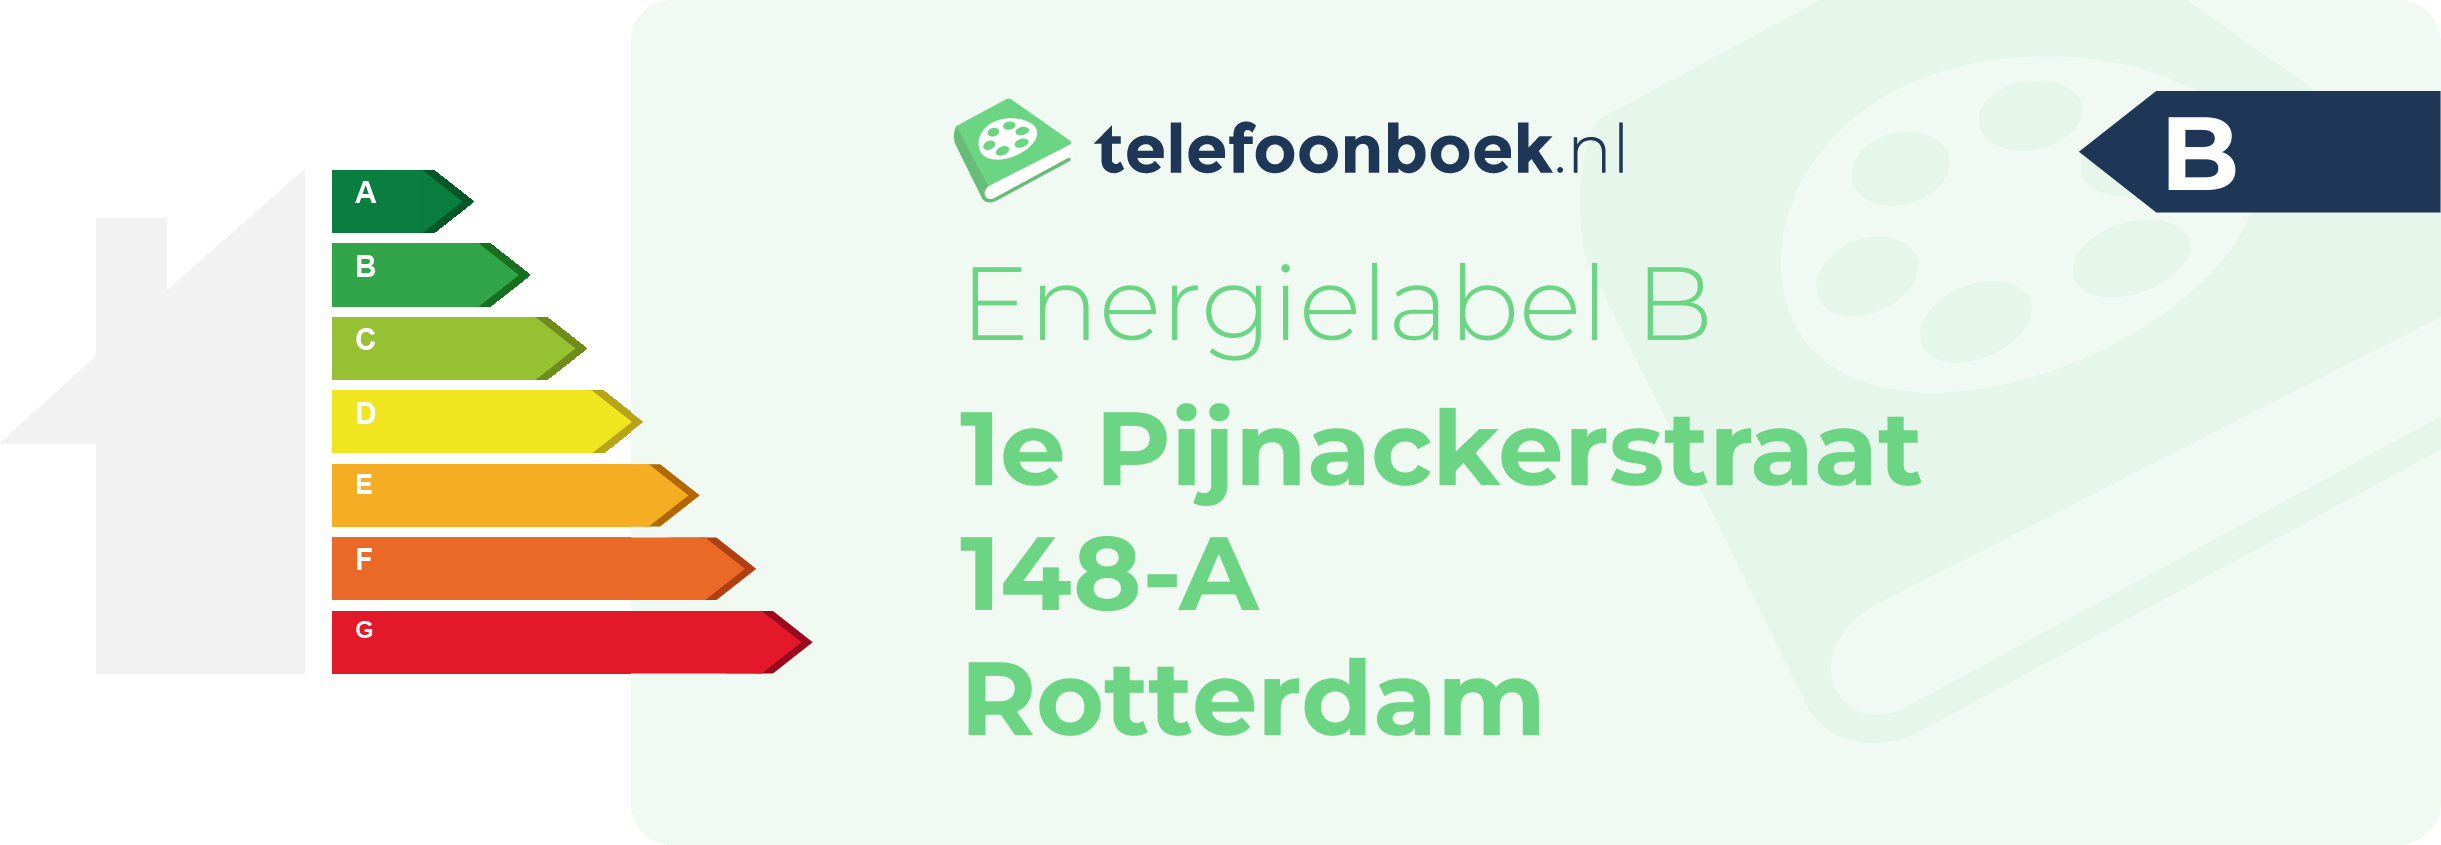 Energielabel 1e Pijnackerstraat 148-A Rotterdam